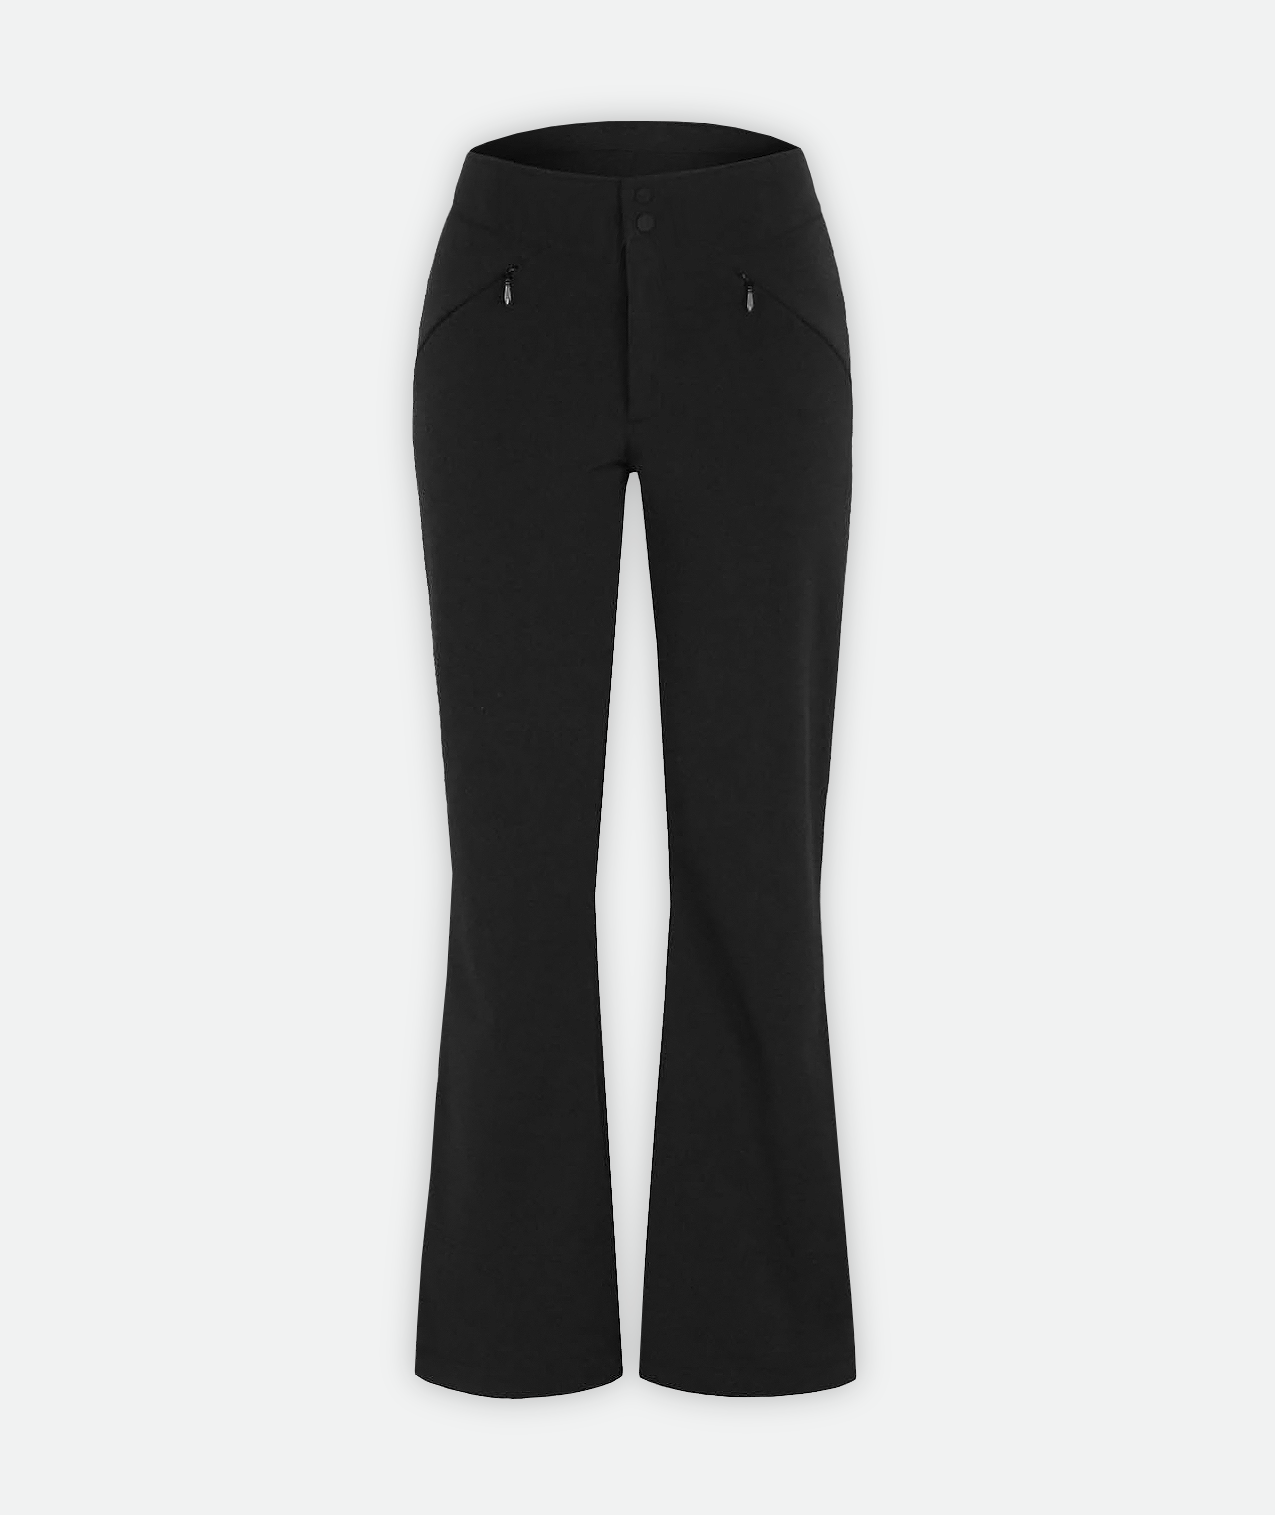 Women's softshell ski trousers 5000 membrane - black